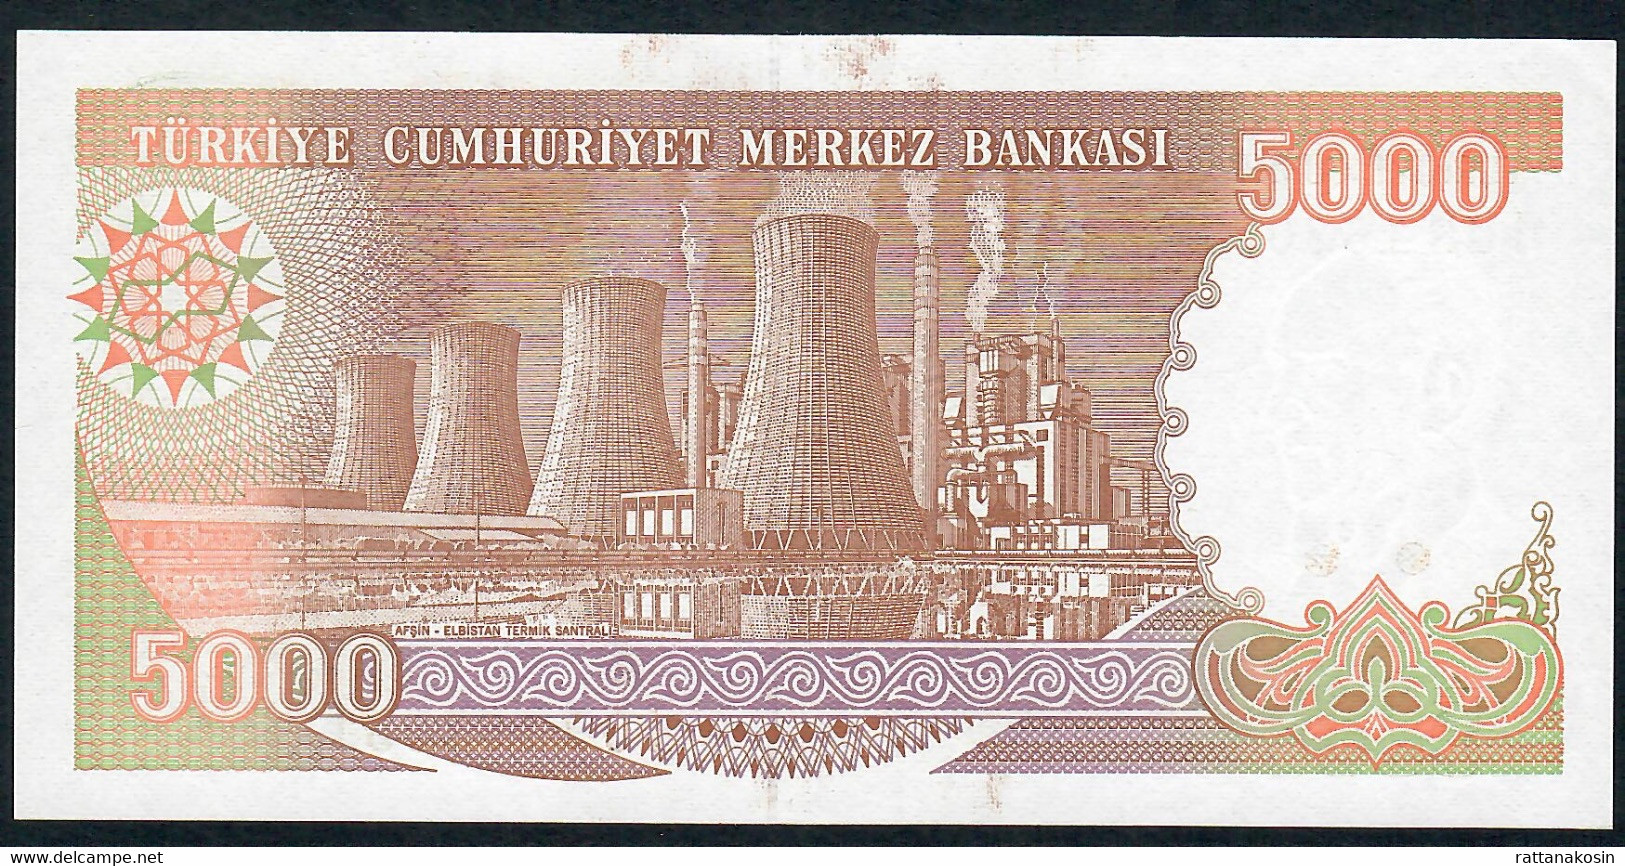 TURKEY  P198 5000 LIRA 1970  #I08   UNC. - Turquie